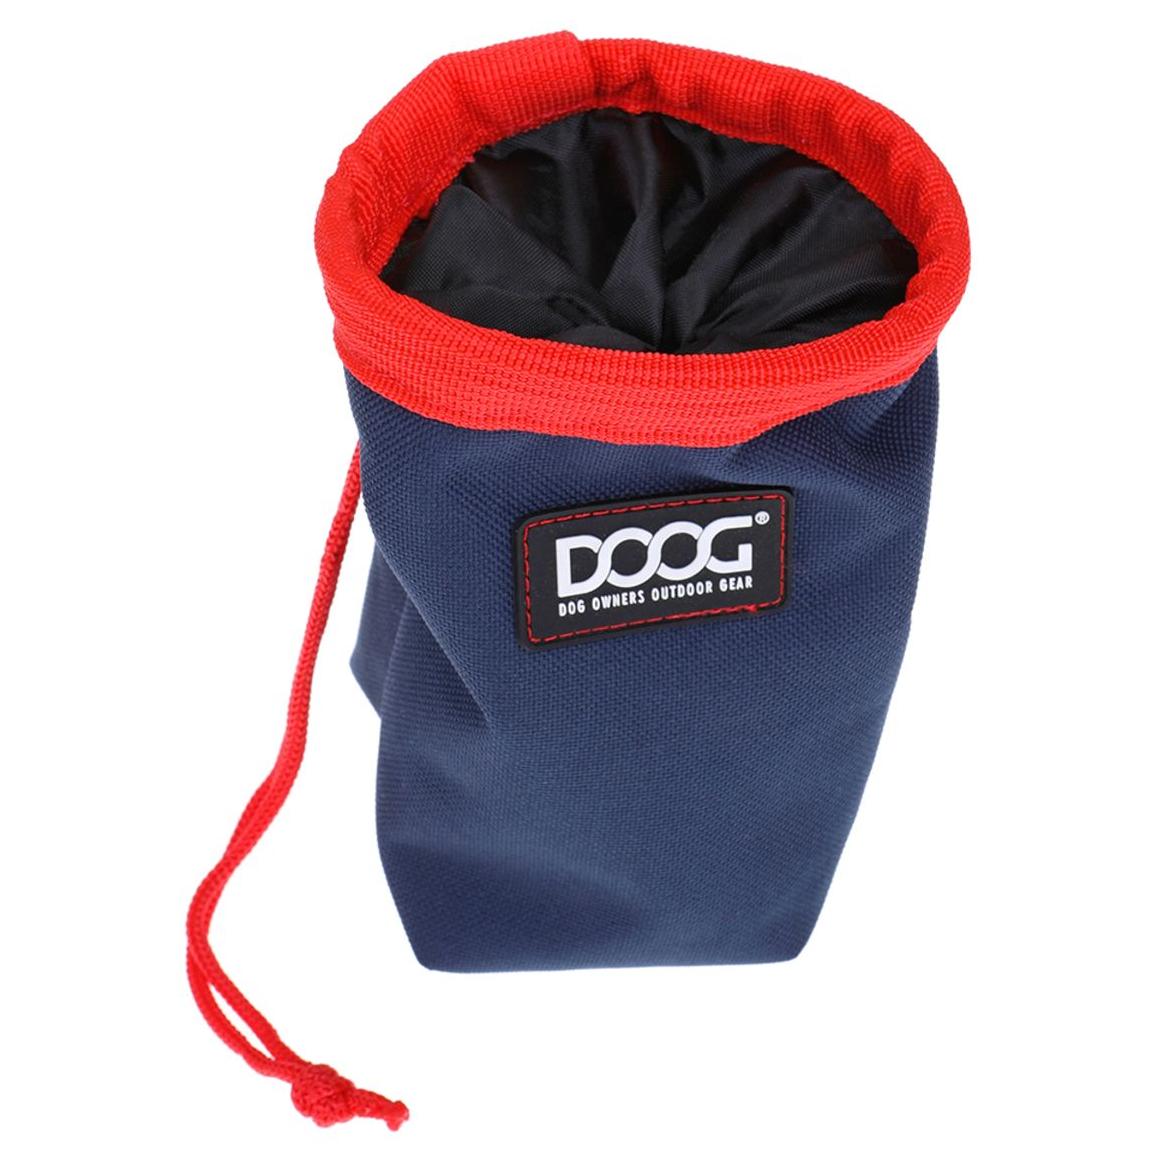 DOOG Treat & Training Pouch (100000022280) [Navy Red]